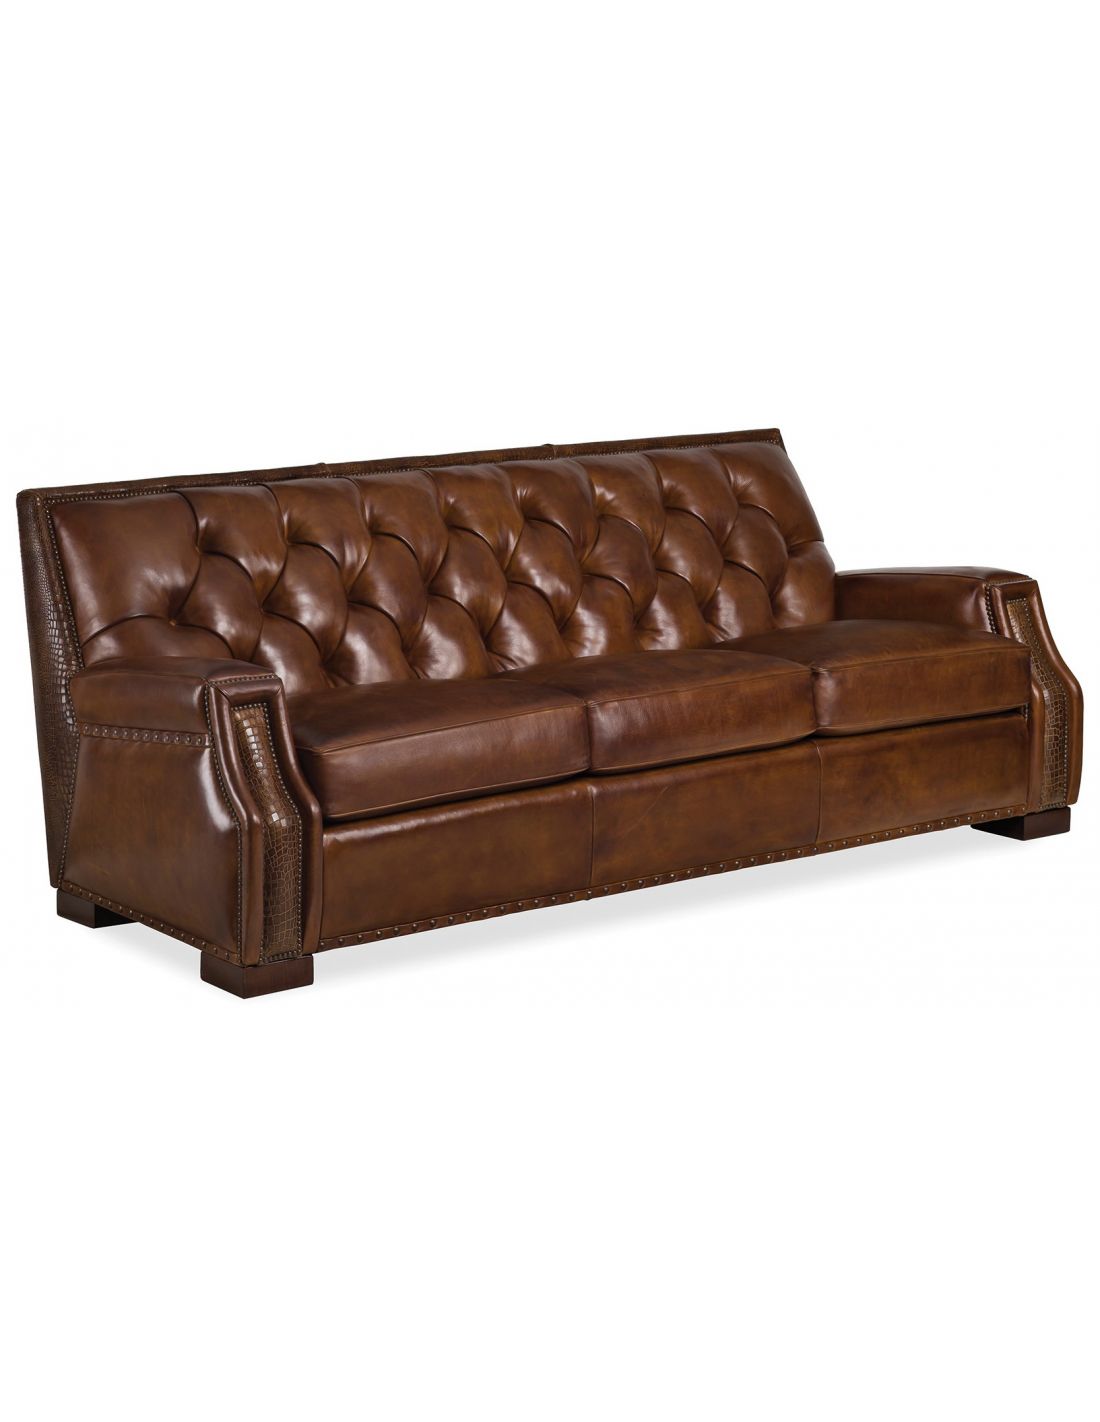 Sofa sofa sofa. High style furnishings. 660